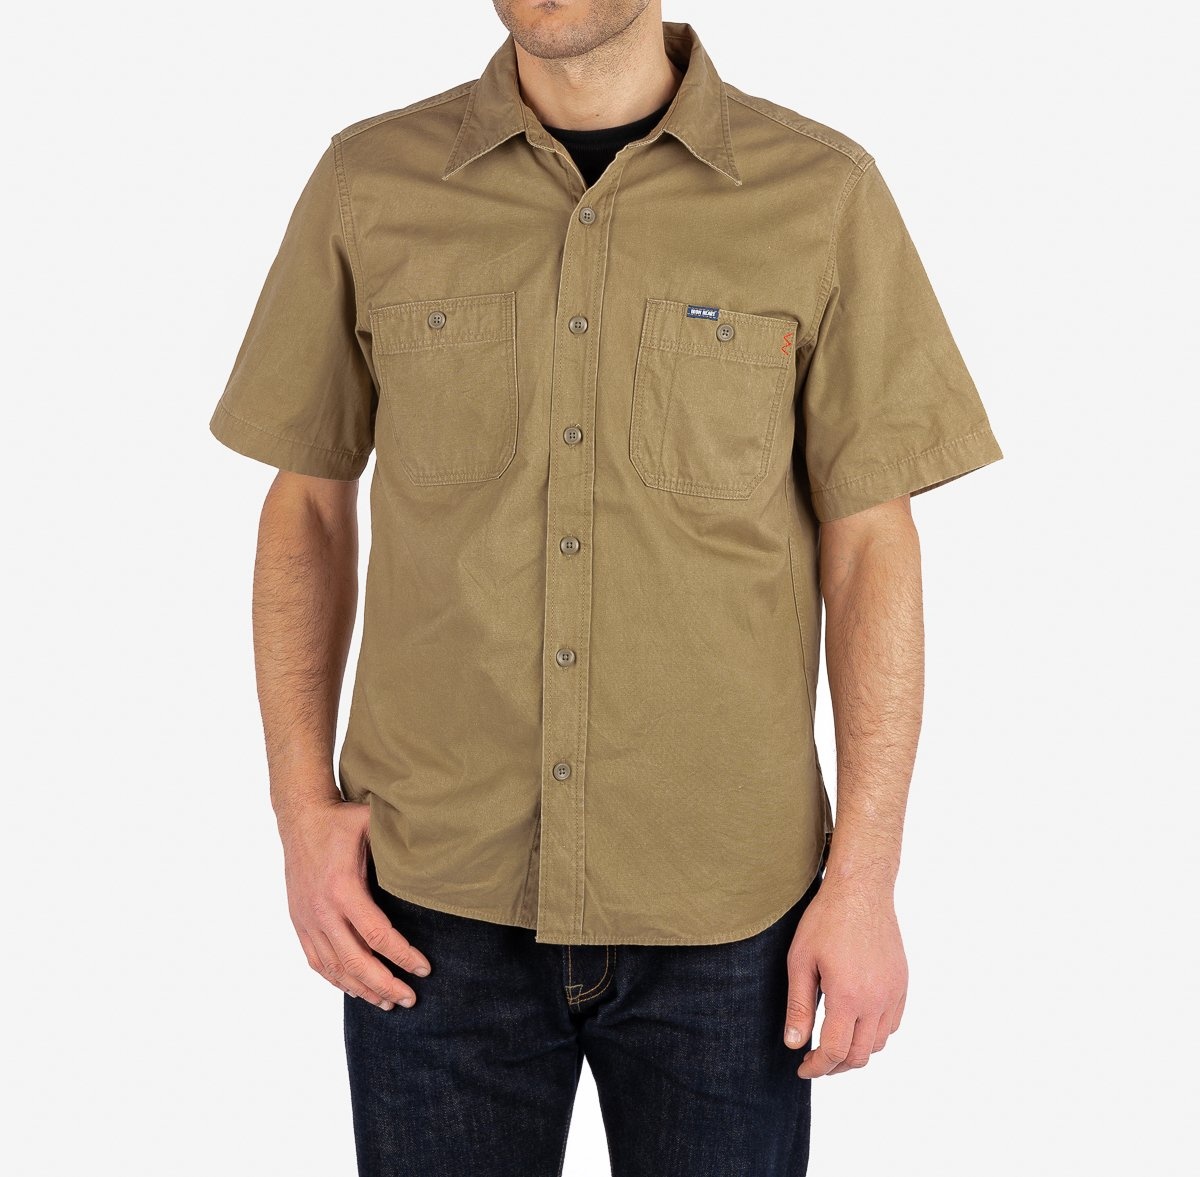 IHSH-393-KHA 7oz Fatigue Cloth Short Sleeved Work Shirt - Khaki - 2